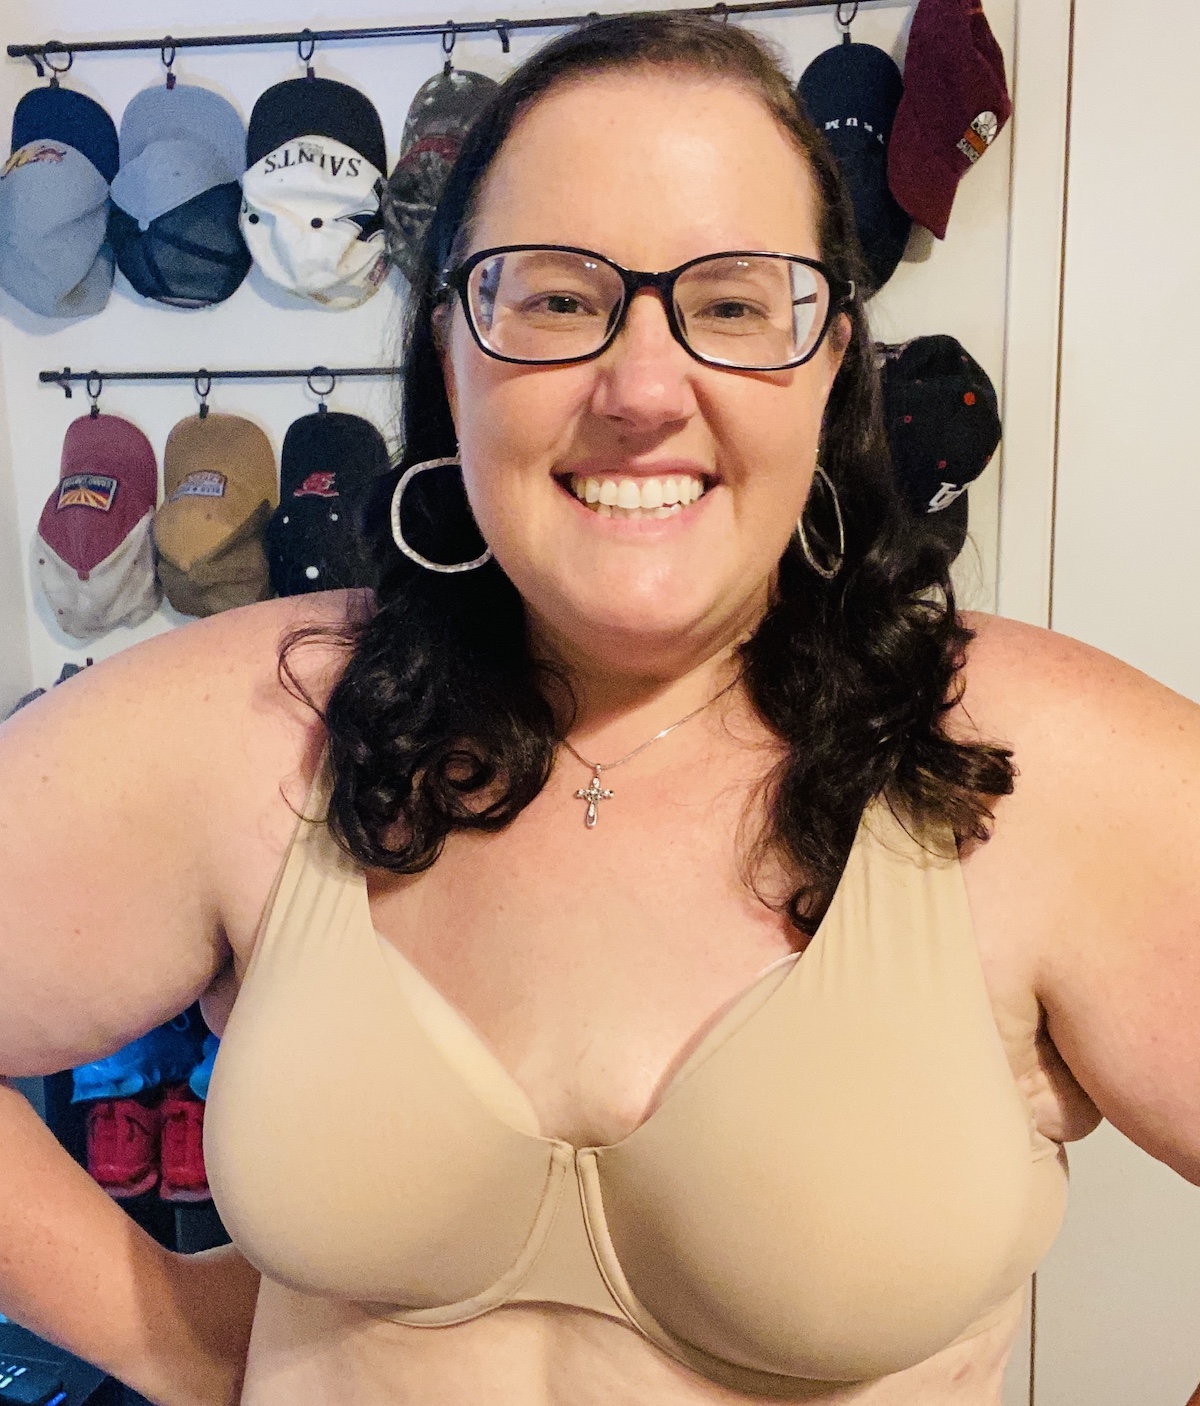 ThirdLove wants to make bra shopping more fun